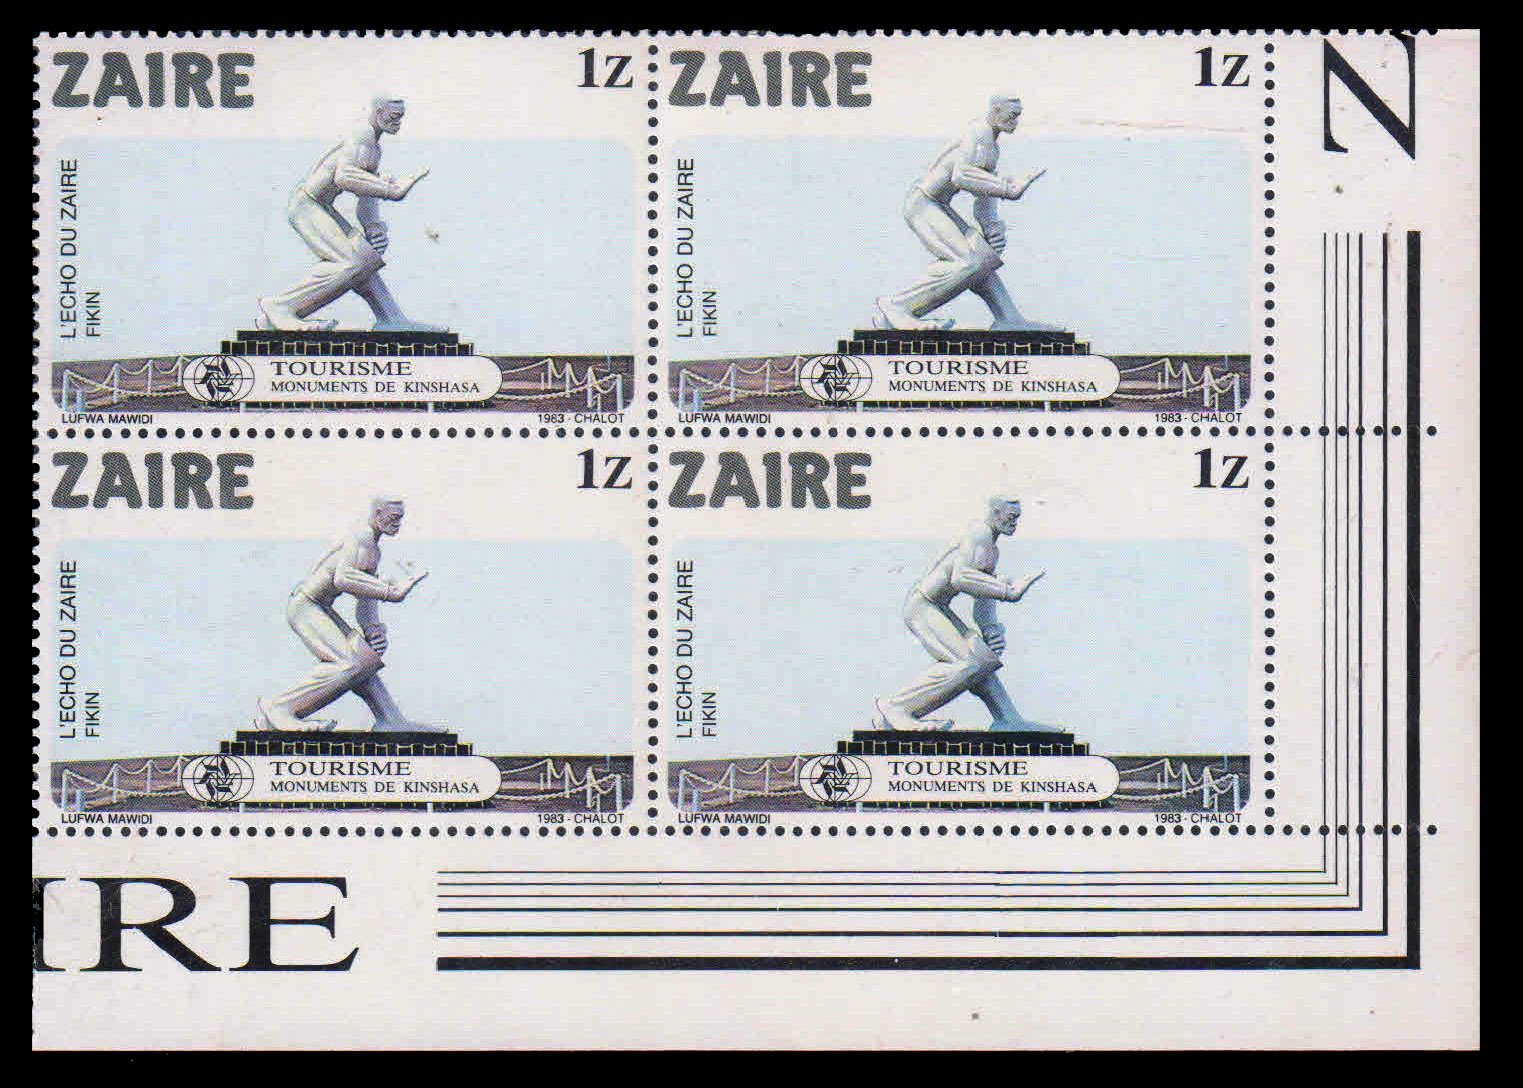 ZAIRE 1983 - Kinshasa Monuments. Echo of Zaire. Block of 4, MNH. S.G. 1158